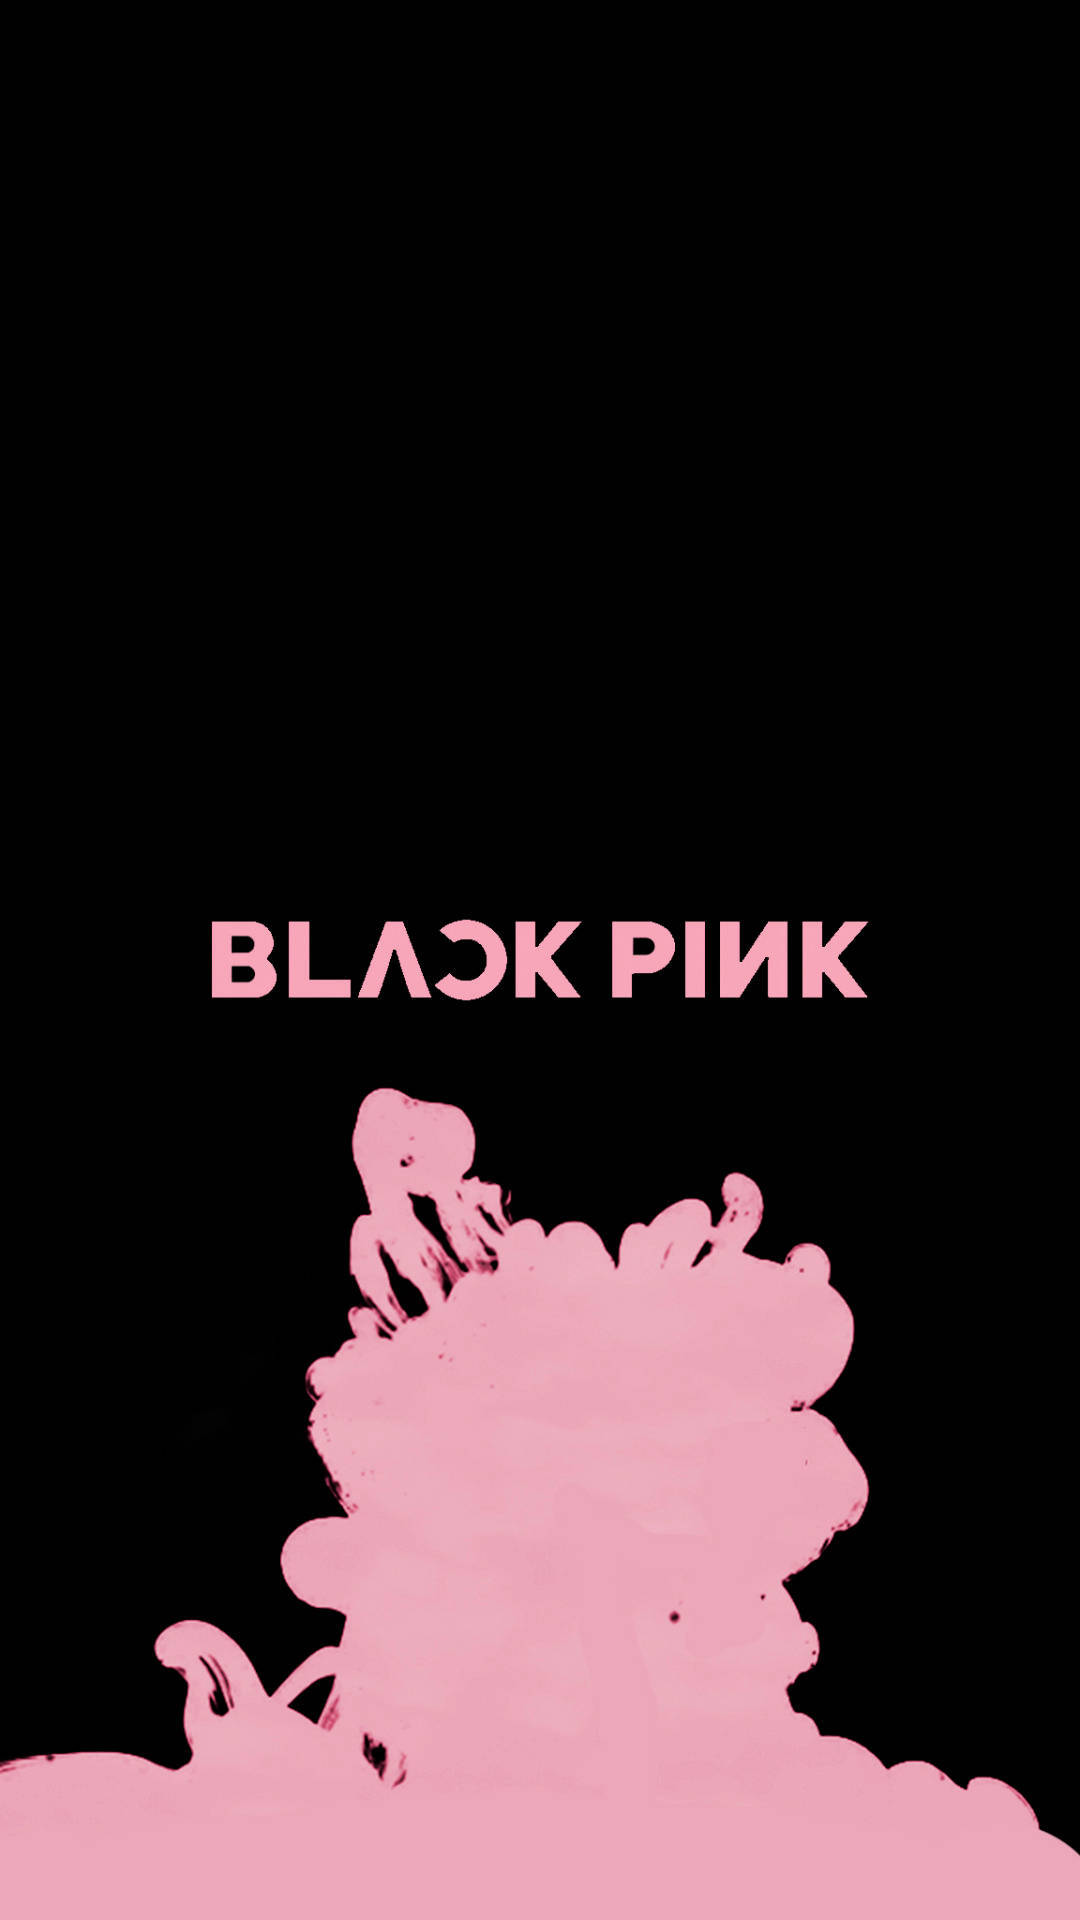 Top 999+ Blackpink Logo Wallpaper Full HD, 4K✅Free to Use